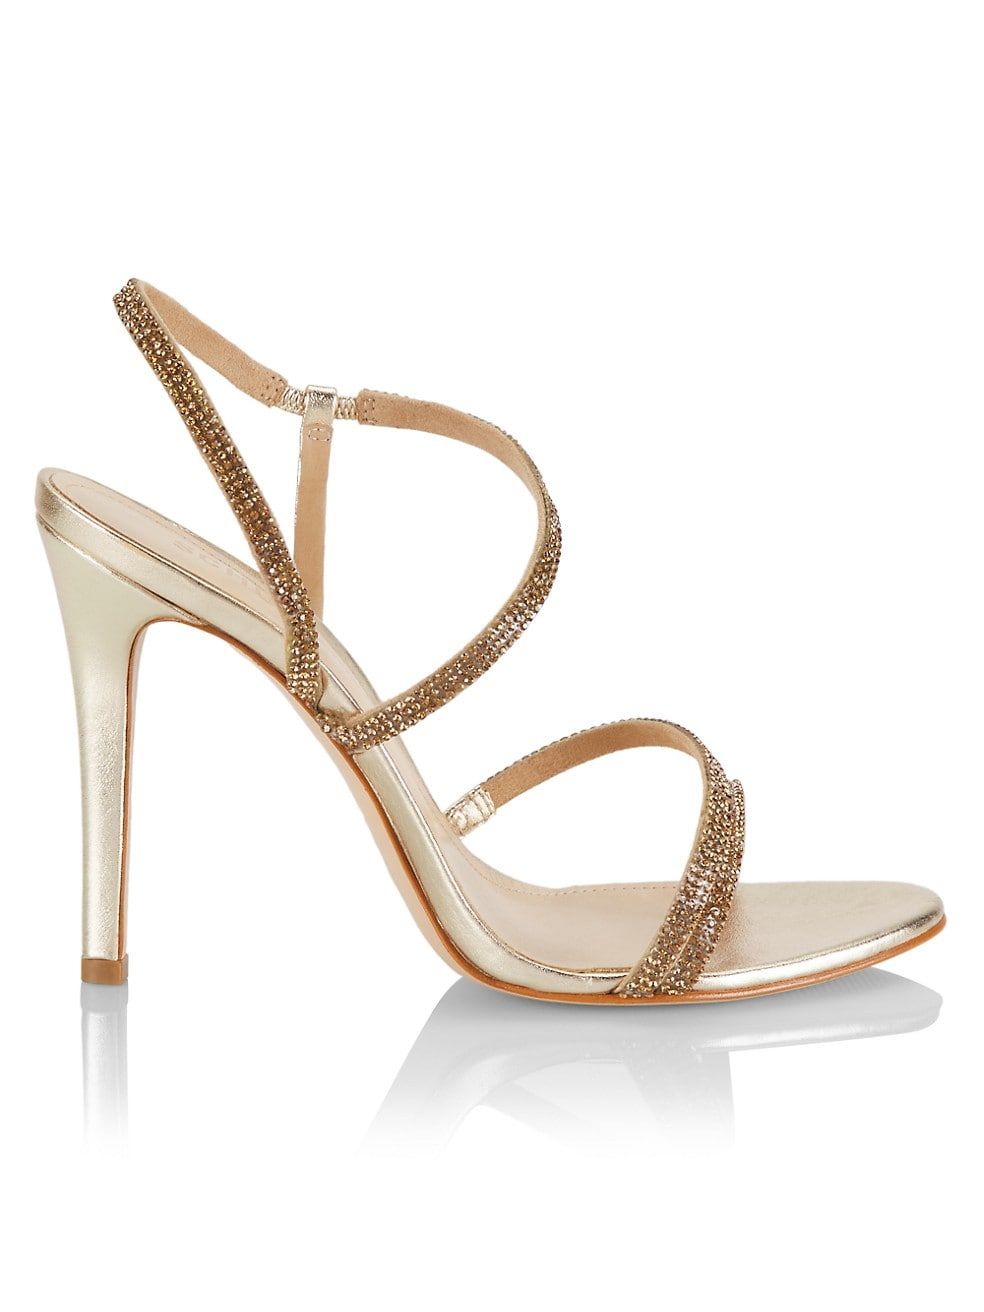 Schutz Mariah Crystal-Embellished Stiletto Sandals | Saks Fifth Avenue (UK)